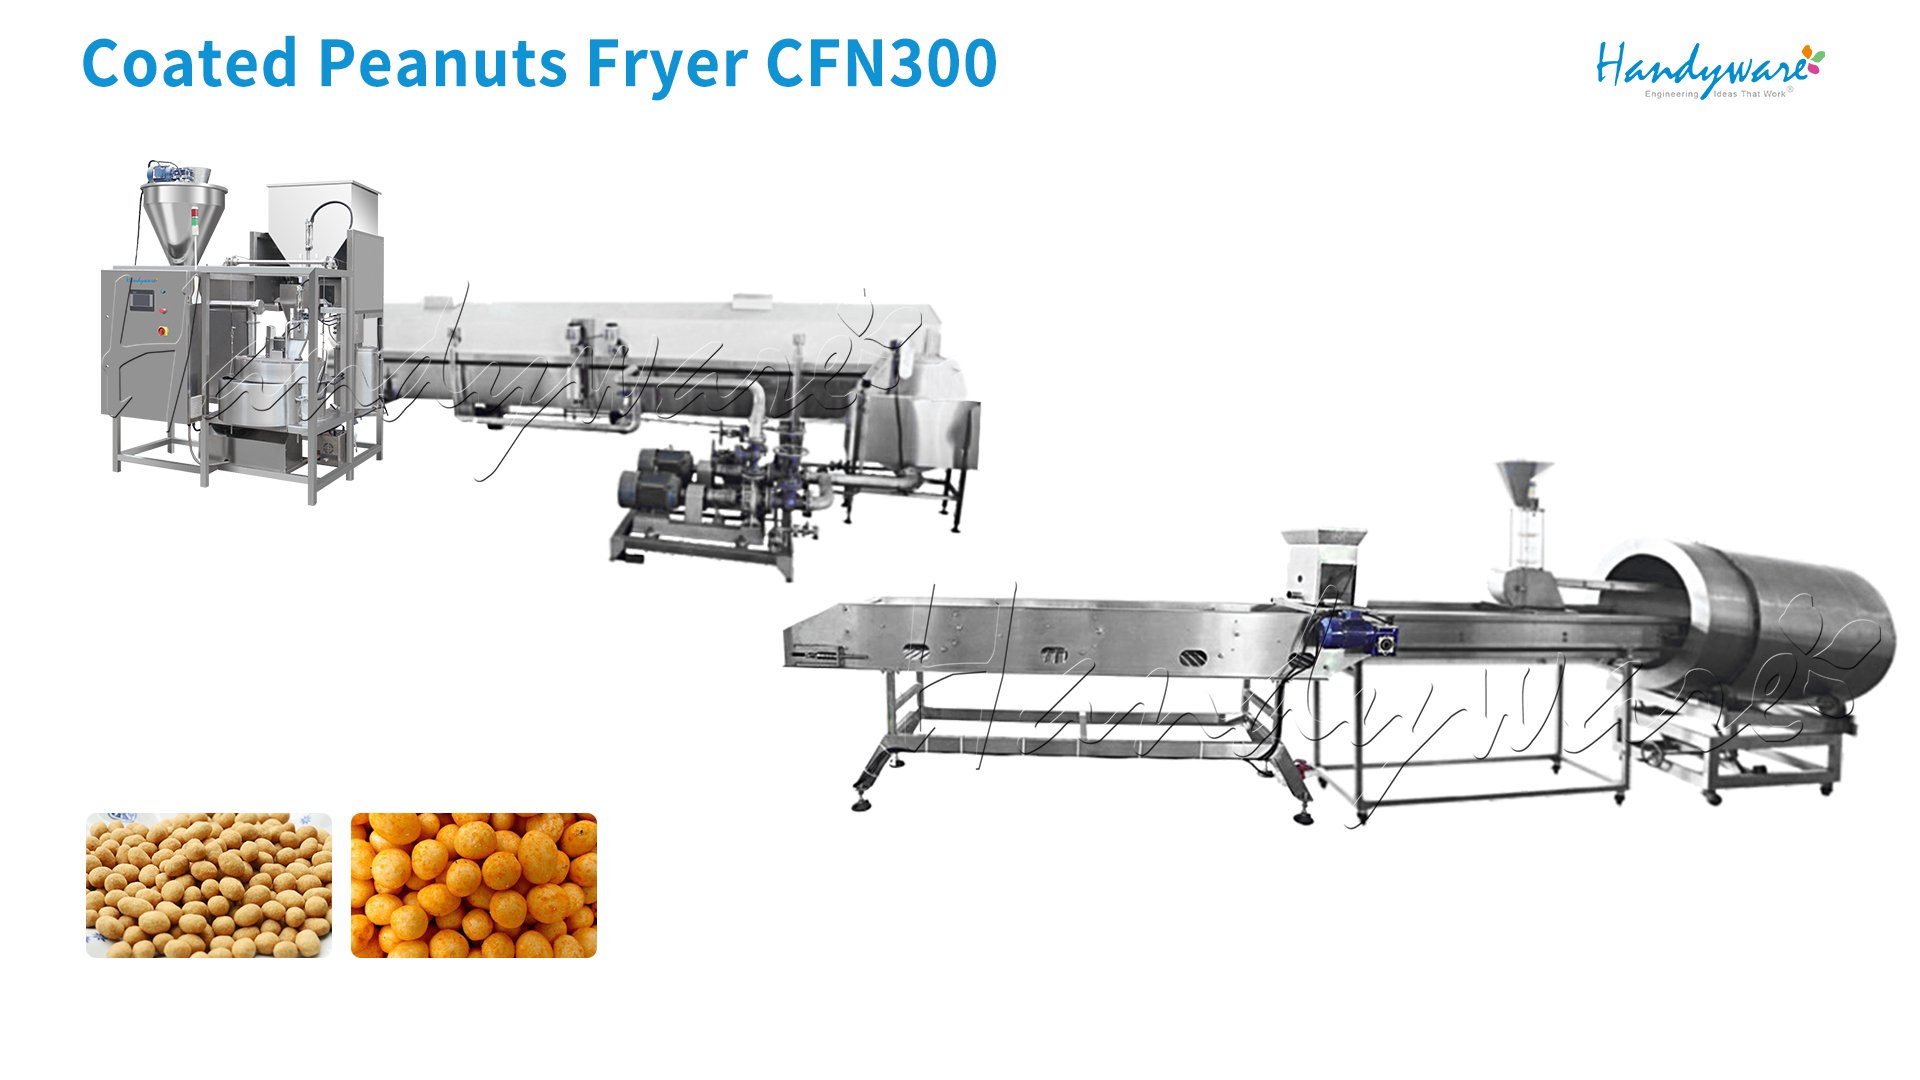 Coated Peanuts Fryer CFN300